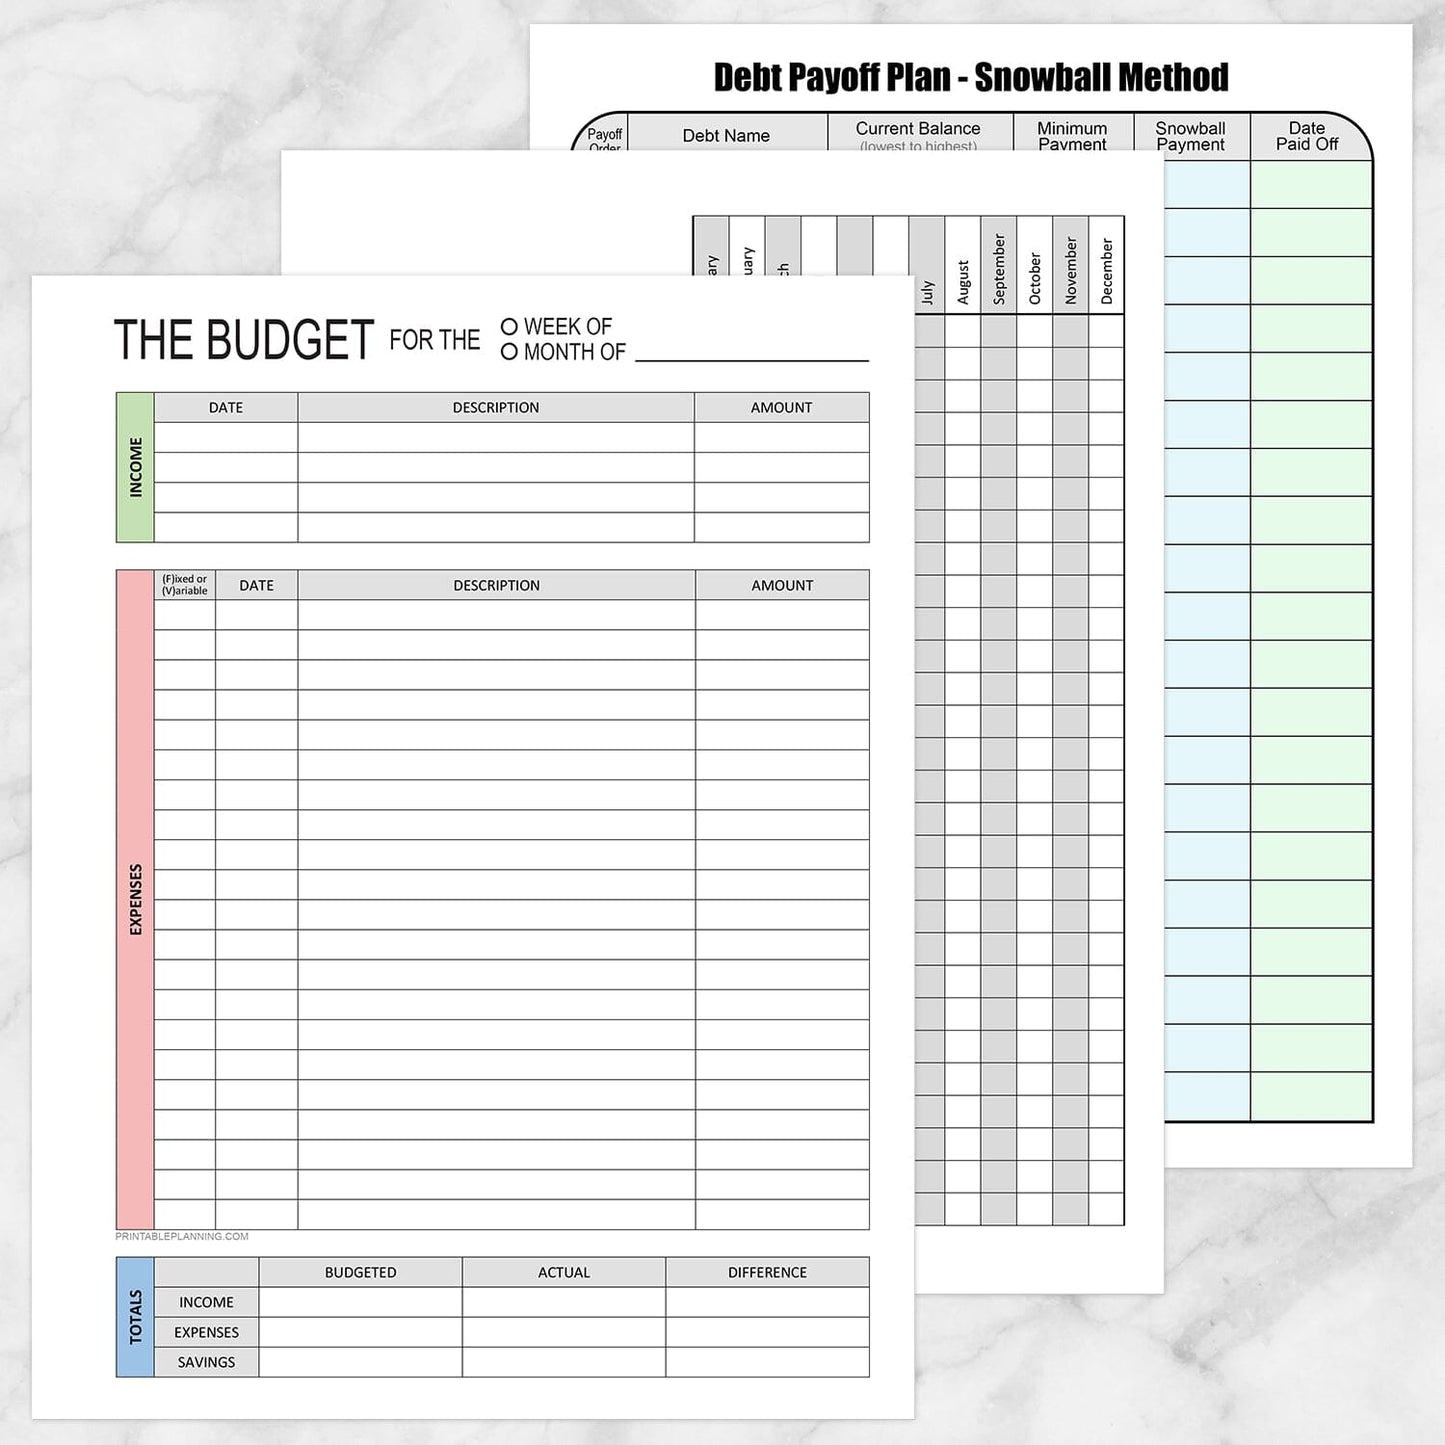 budget planner printable, financial planner